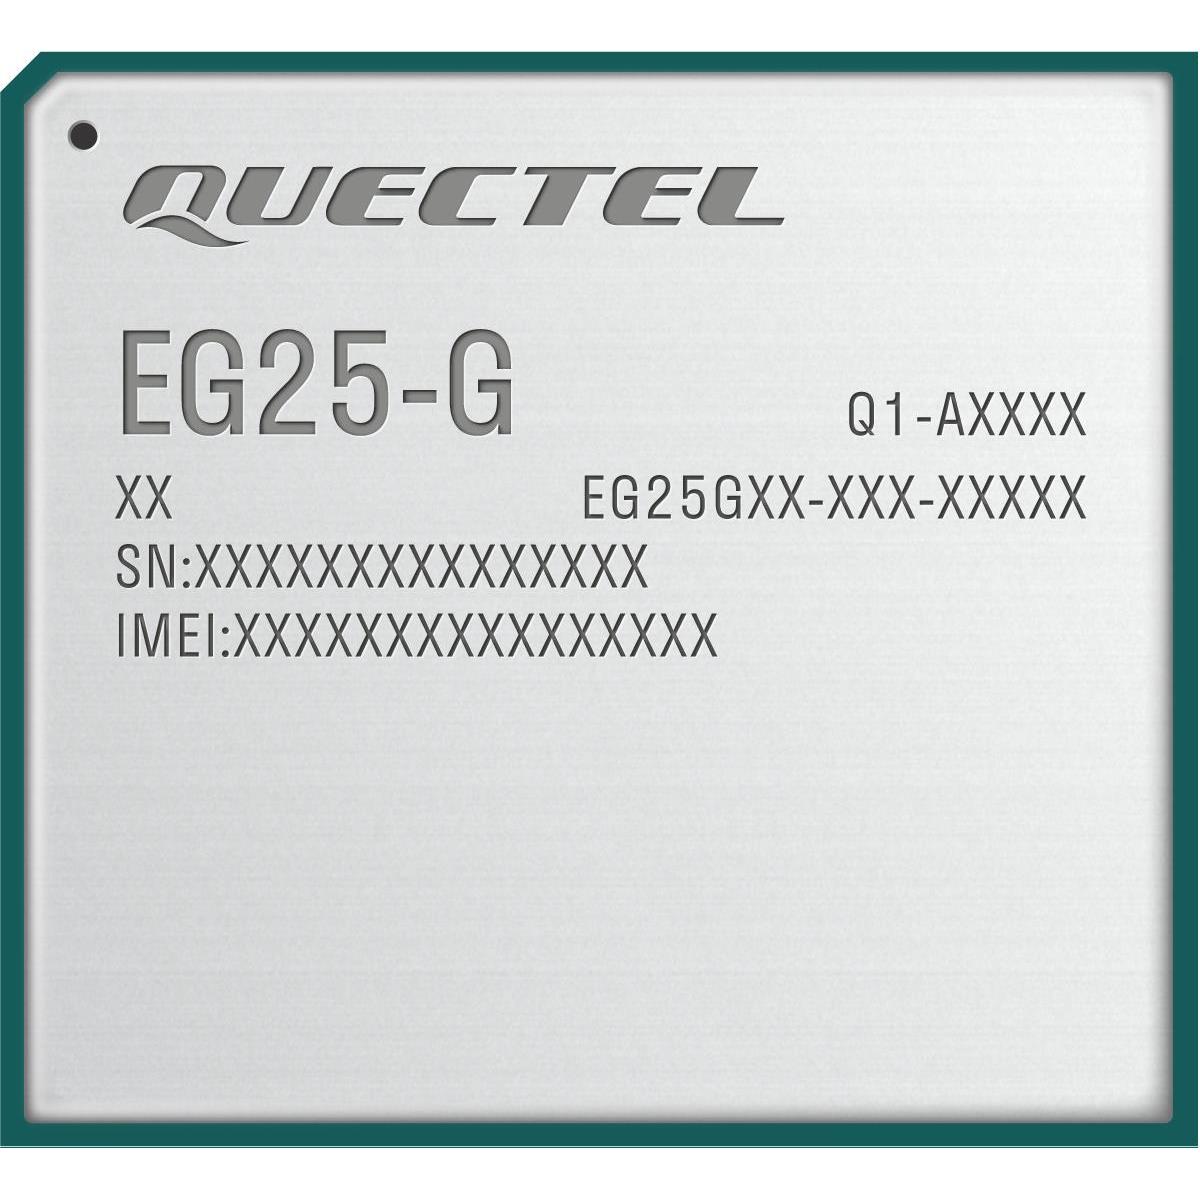 the part number is EG25GGCTEA-128-SGNS